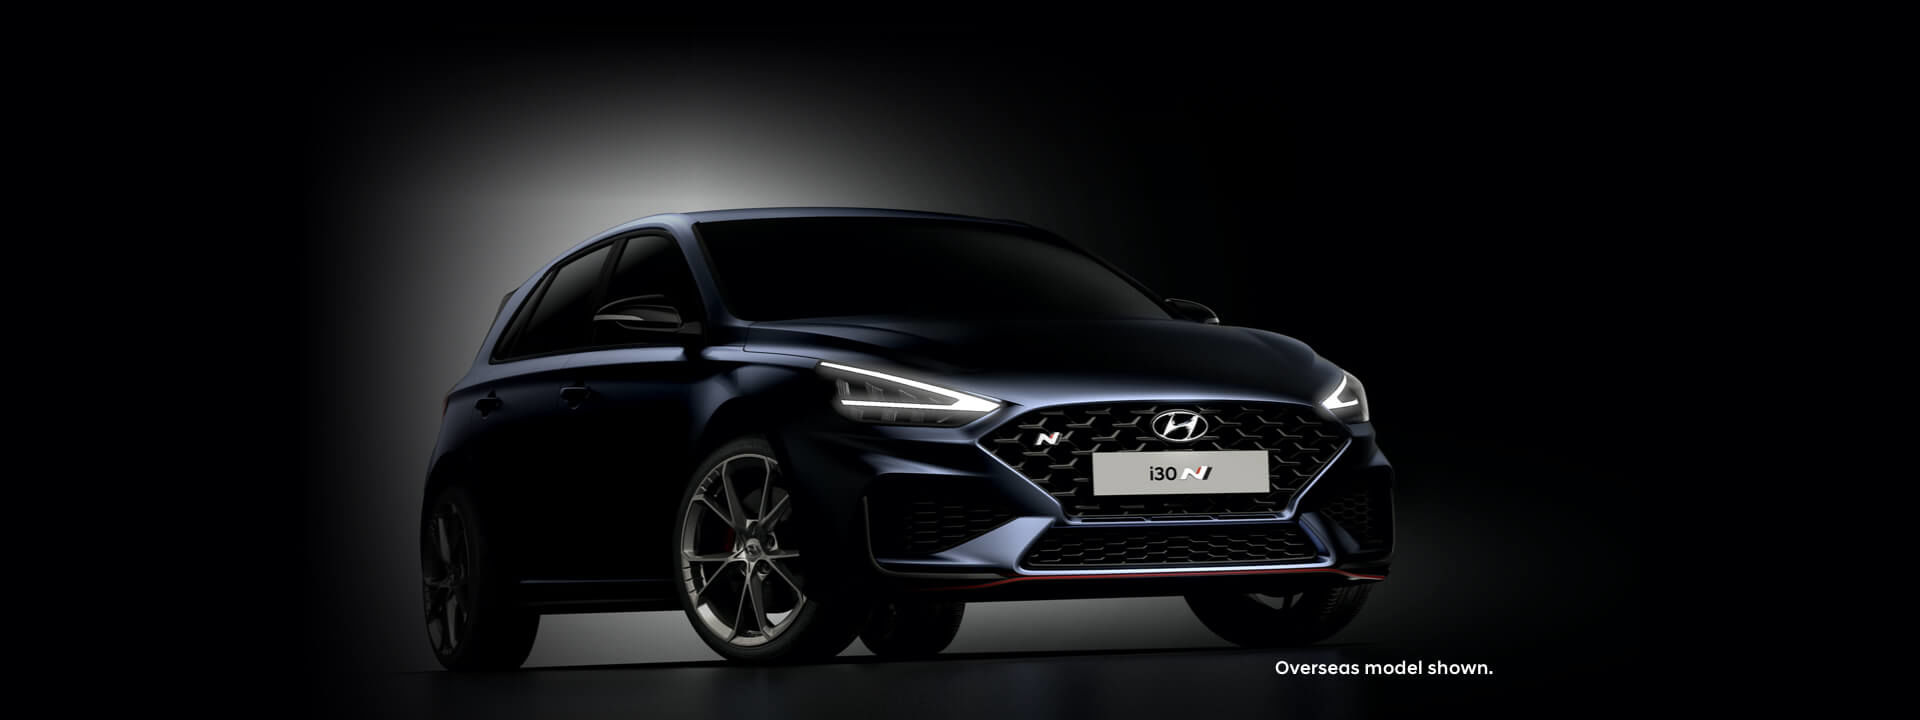 Hyundai_i30-N-DCT-Teaser-Images01_header_desktop_1920x720.jpg